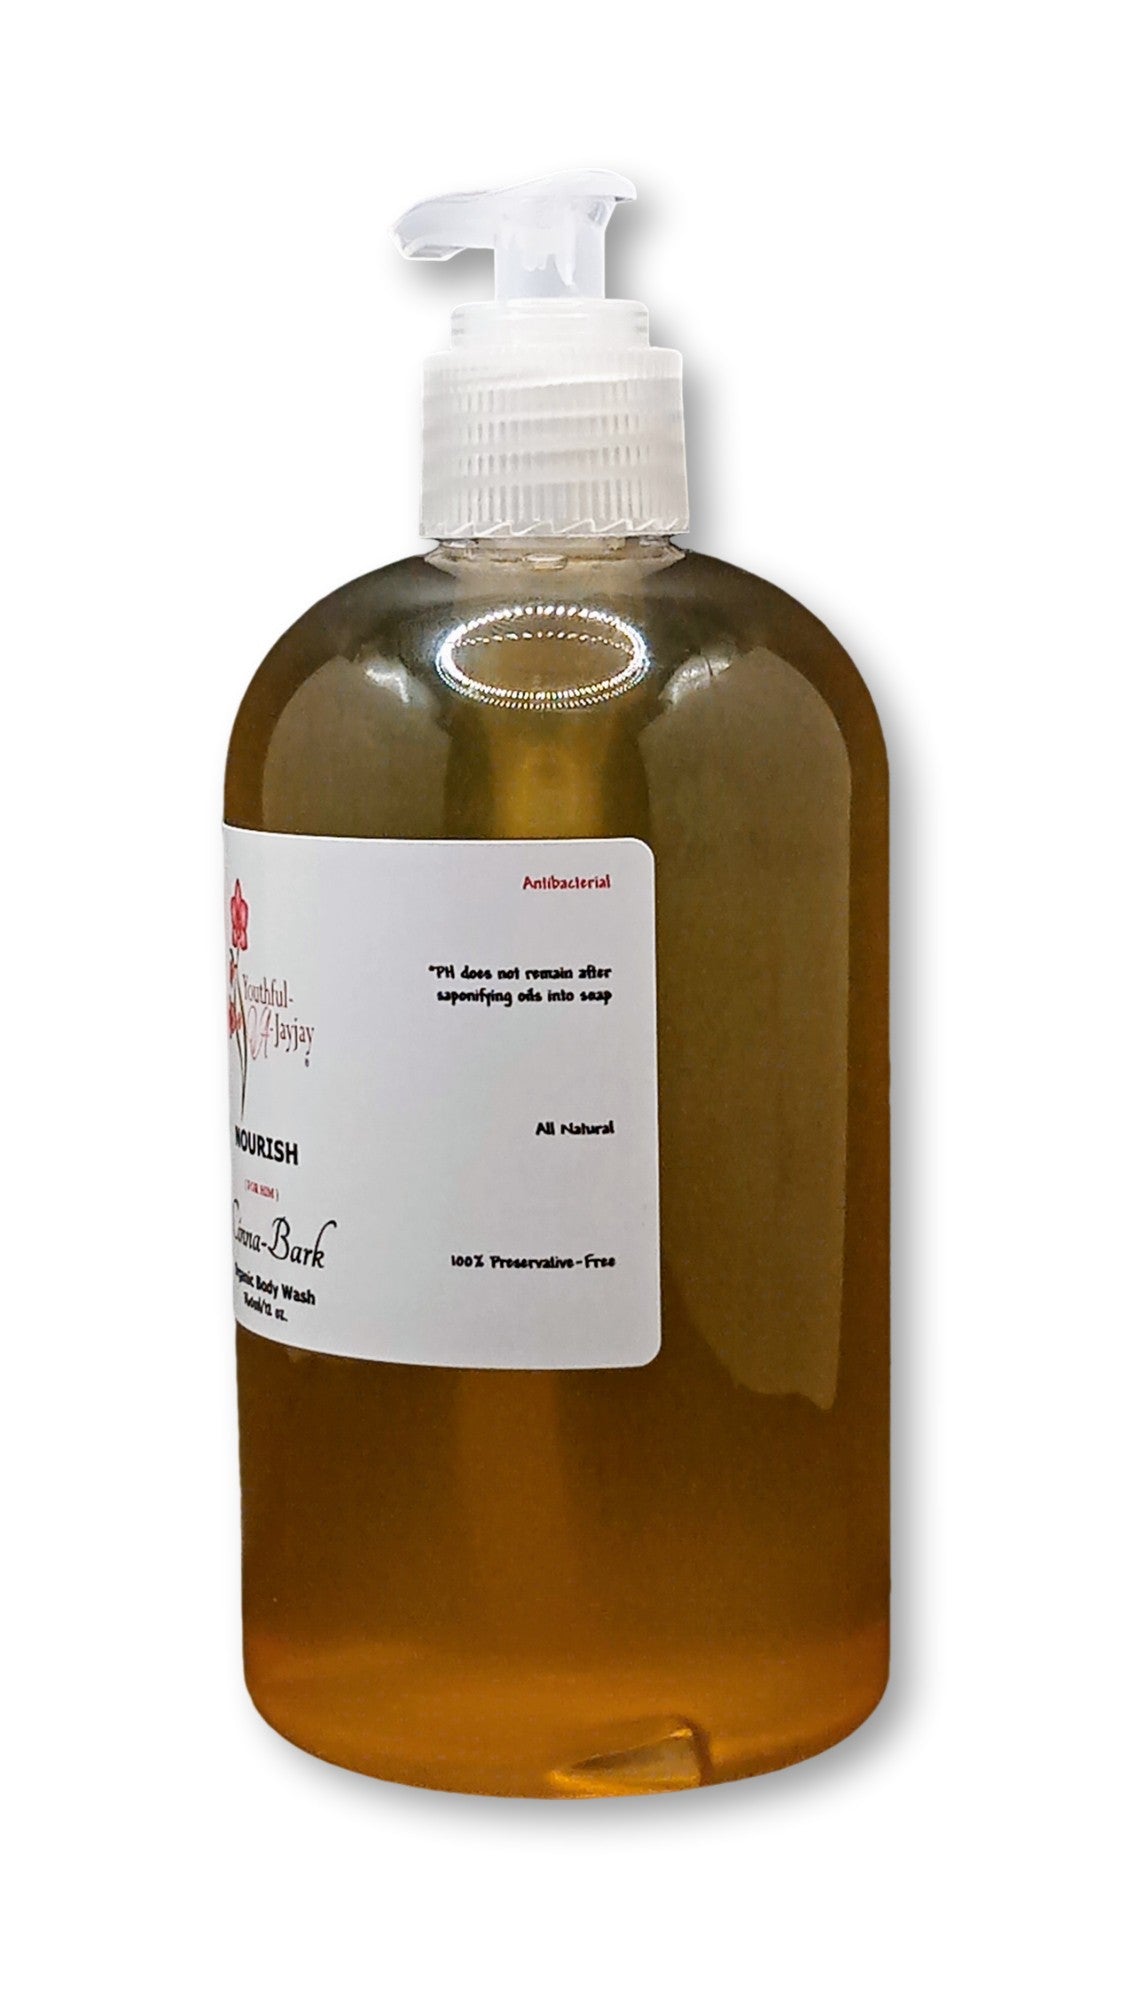 NOURISH: Cinna-Bark Organic Body Wash, Handcrafted, Antibacterial, FOR HIM, 12oz.